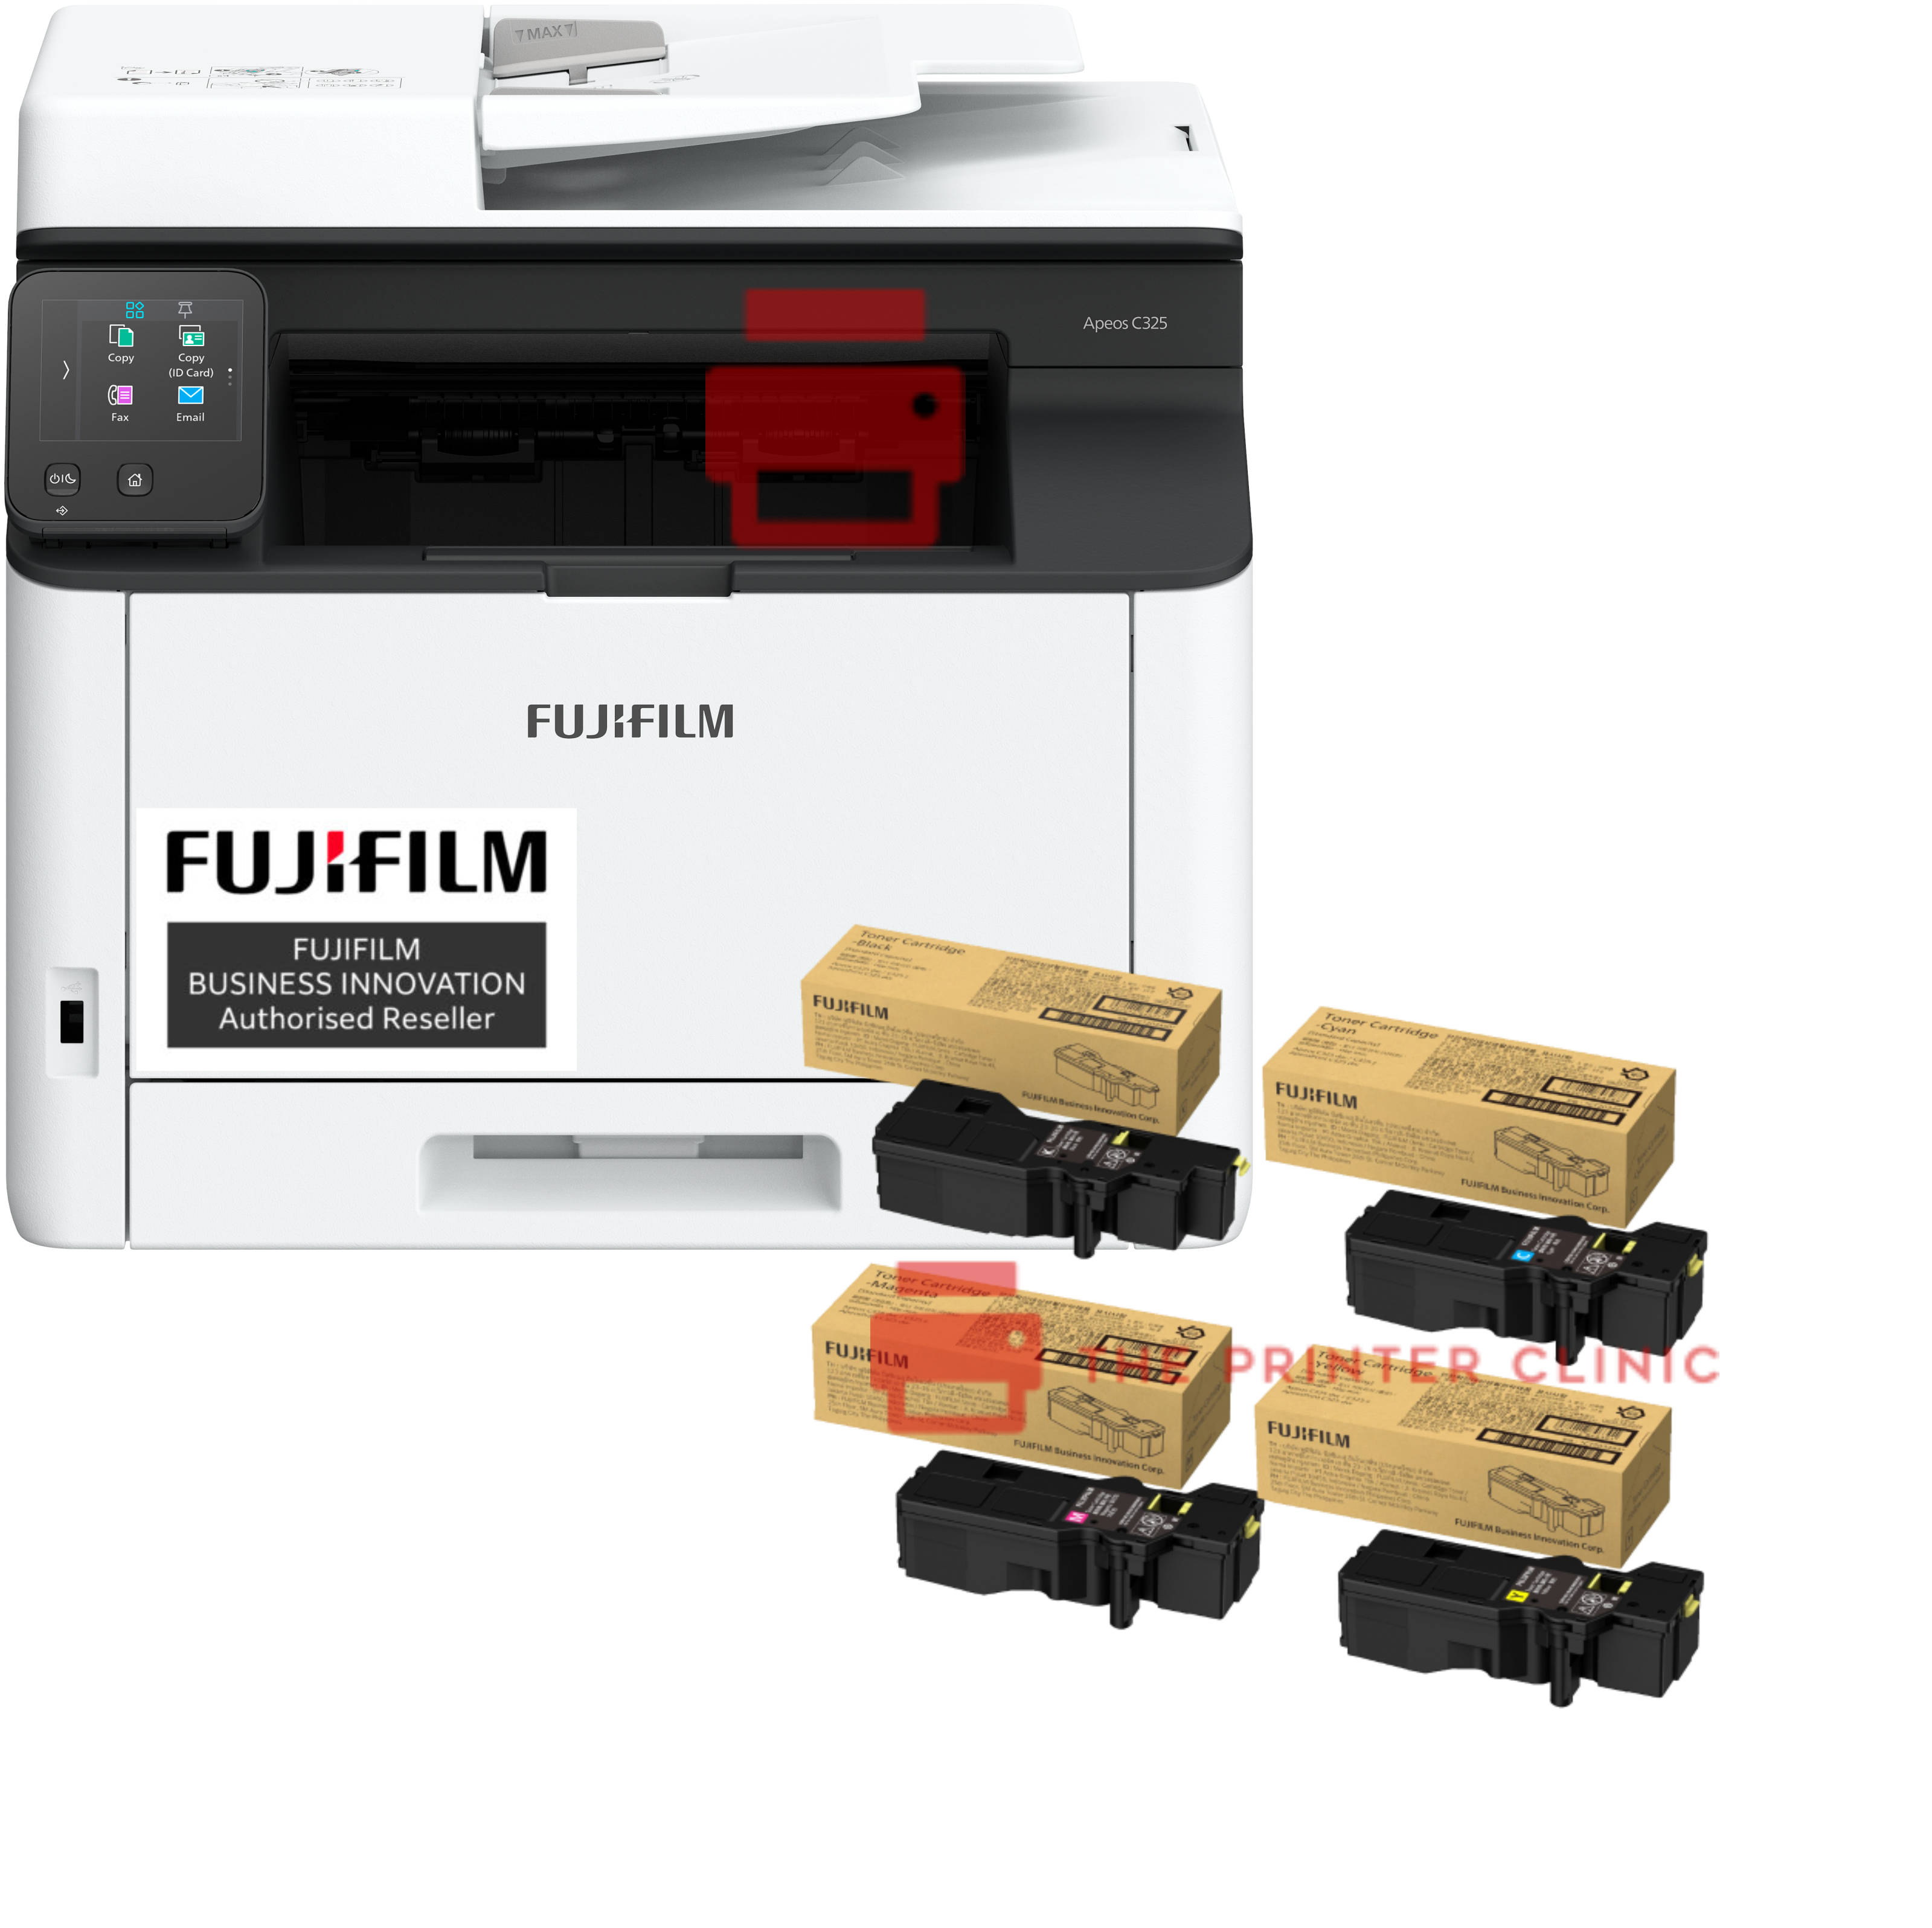 FUJIFILM Apeos C325z Wireless A4 Colour Multifunction Printer + Extra Set of Toners & 3Y Warranty